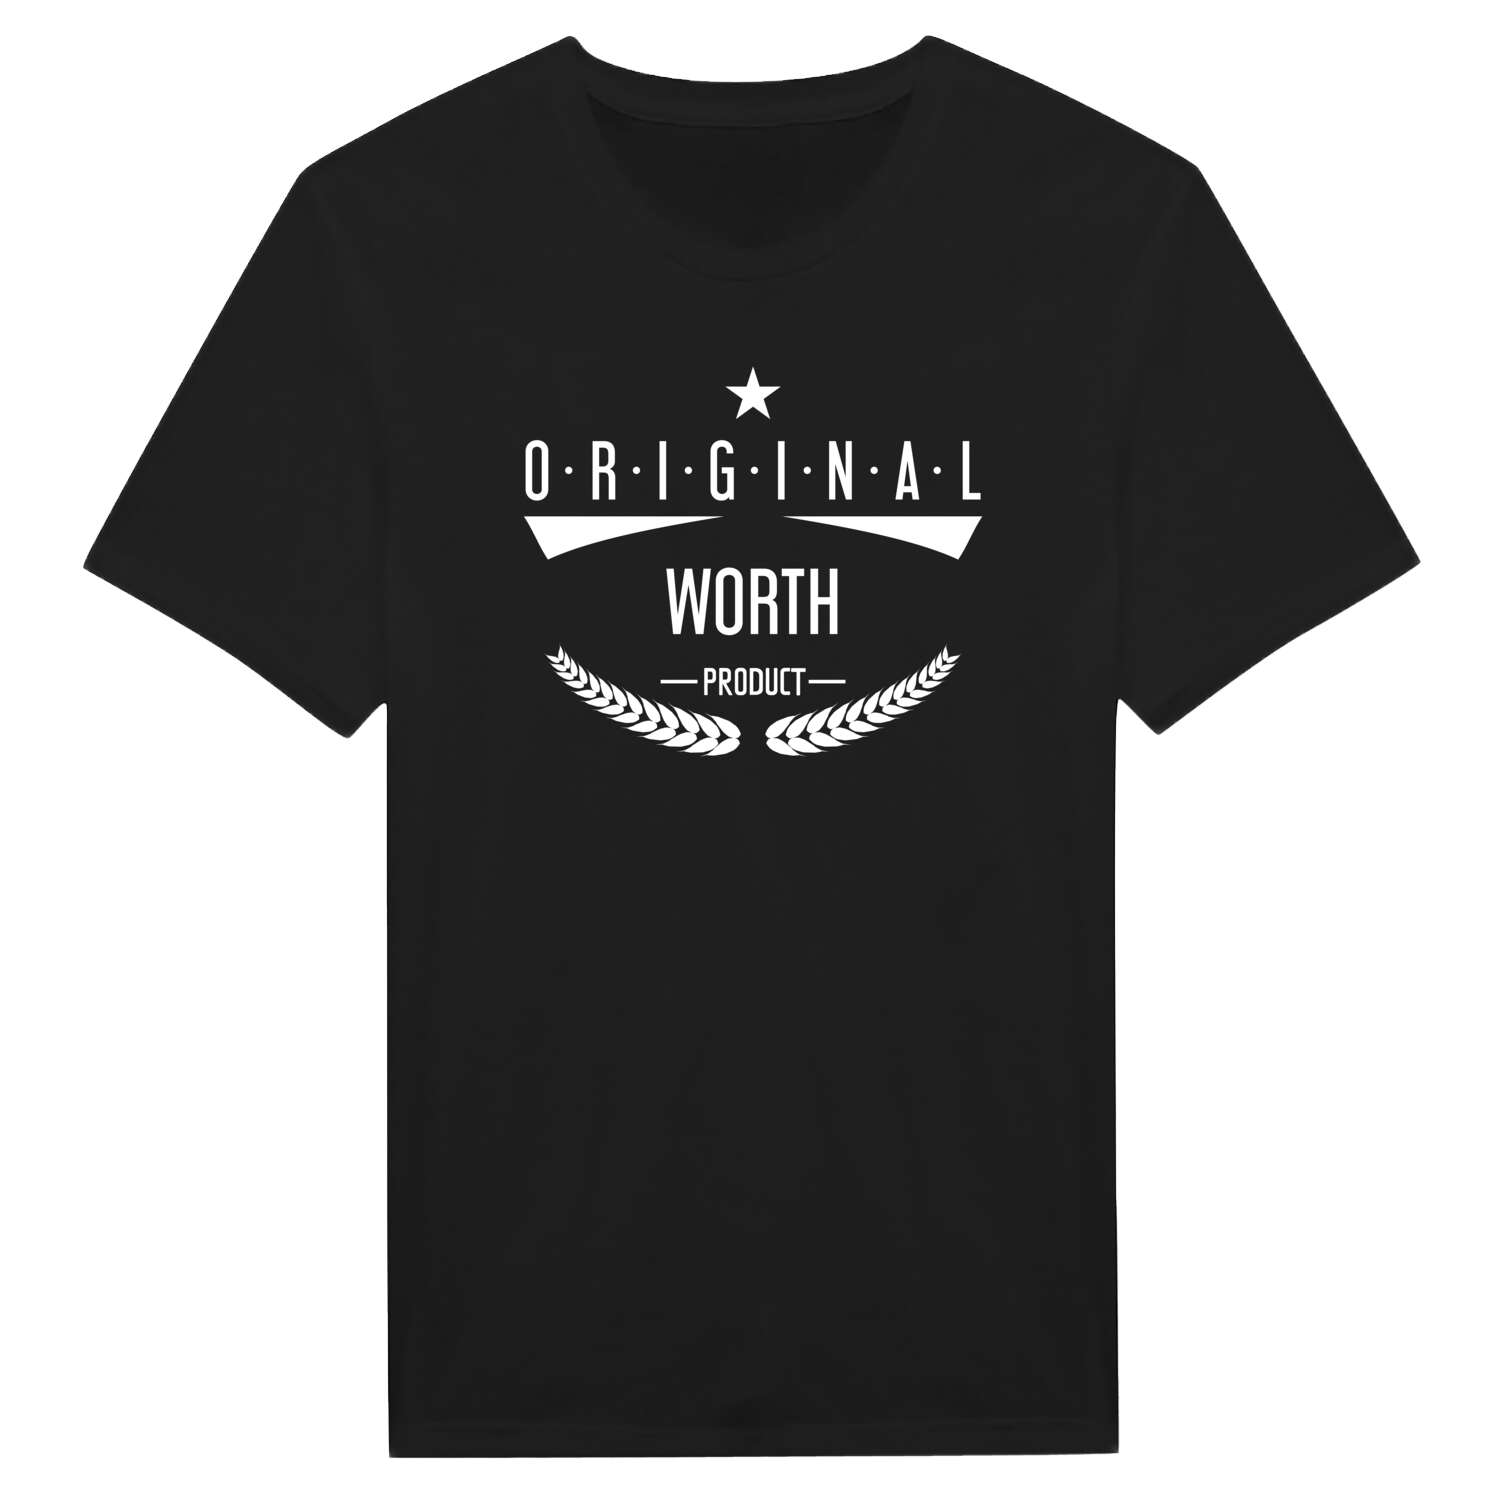 Worth T-Shirt »Original Product«